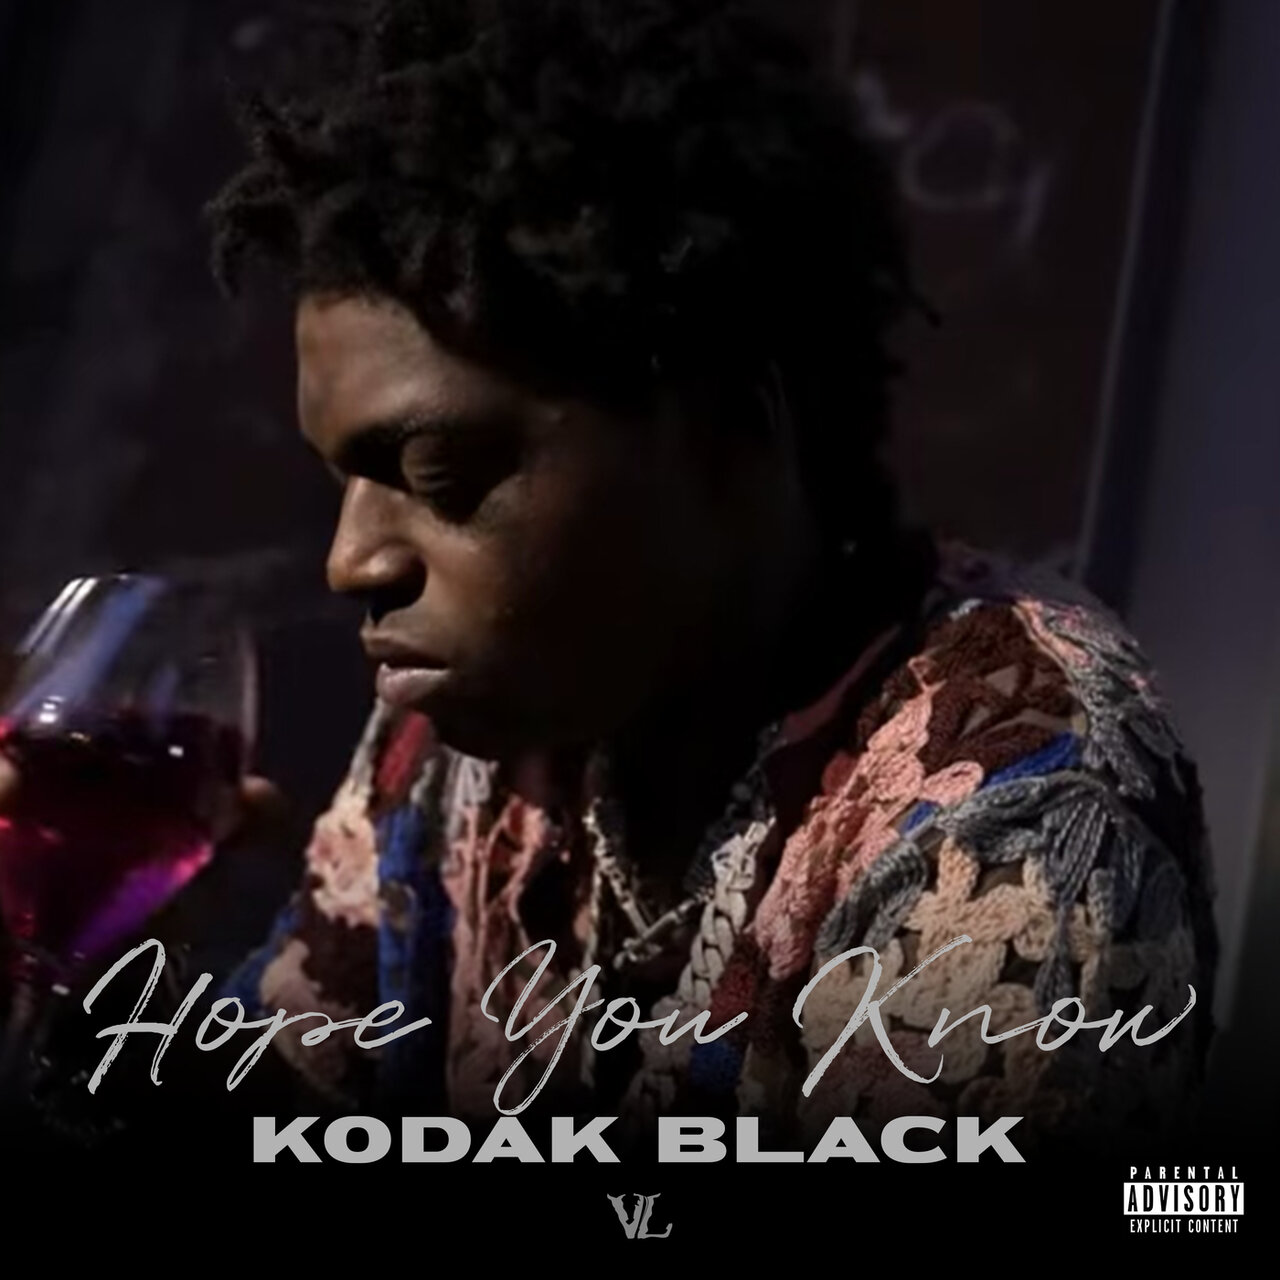 Kodak Black - Hope You Know (Cover)